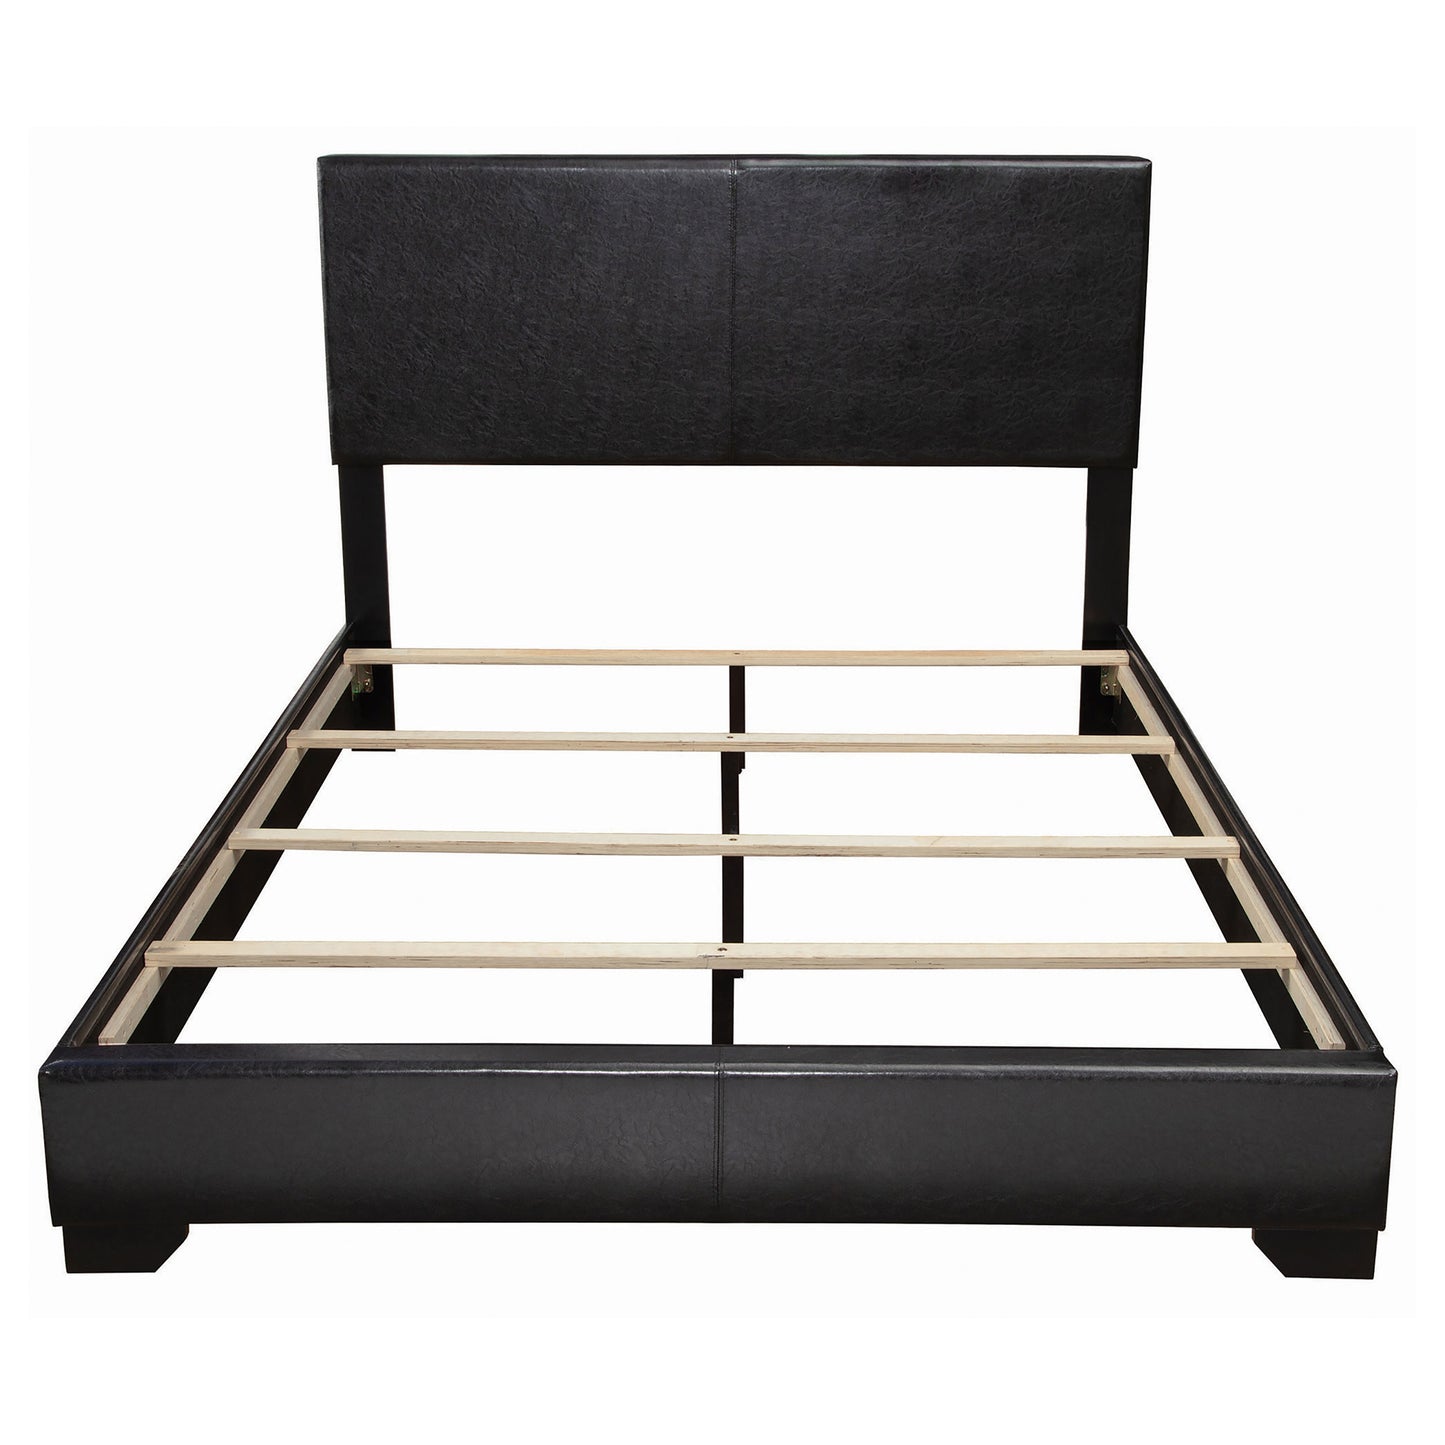 Conner Upholstered Queen Panel Bed Black